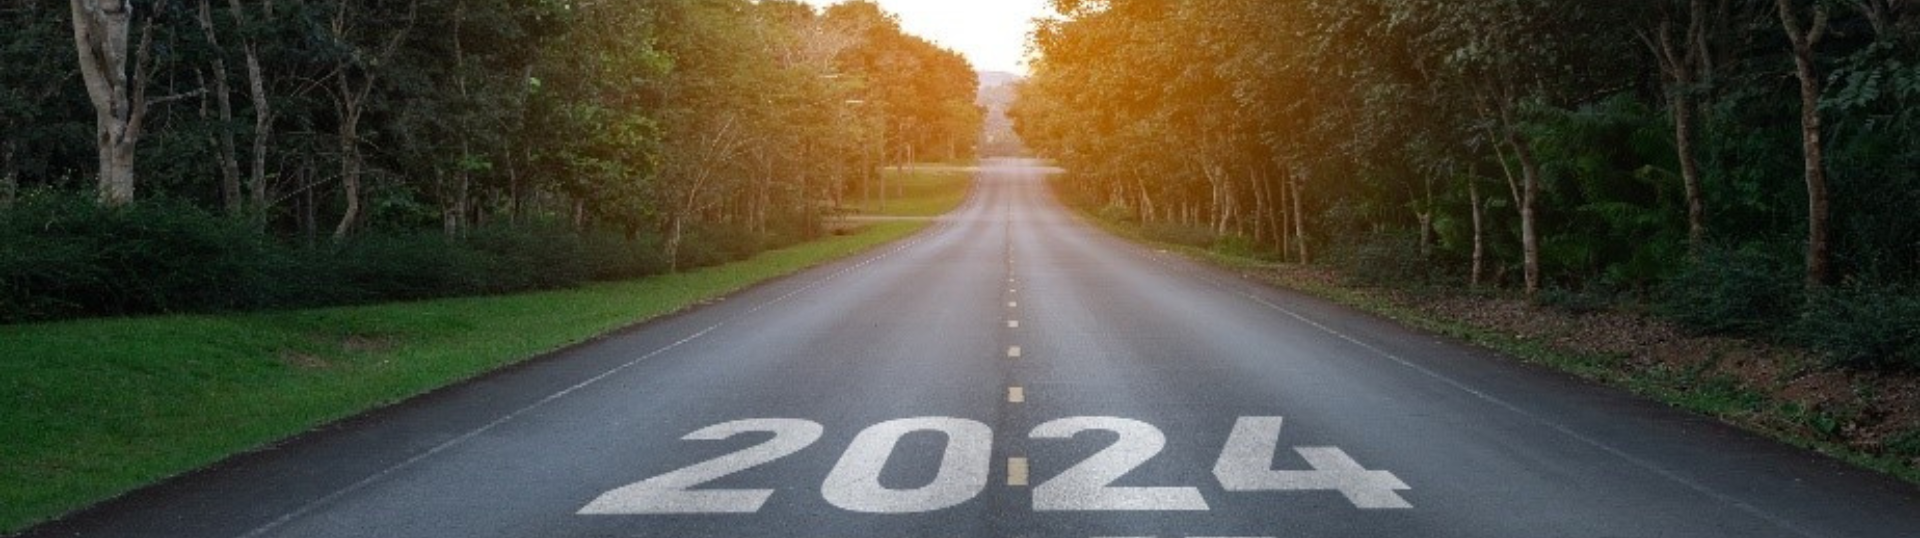 2024-start-road